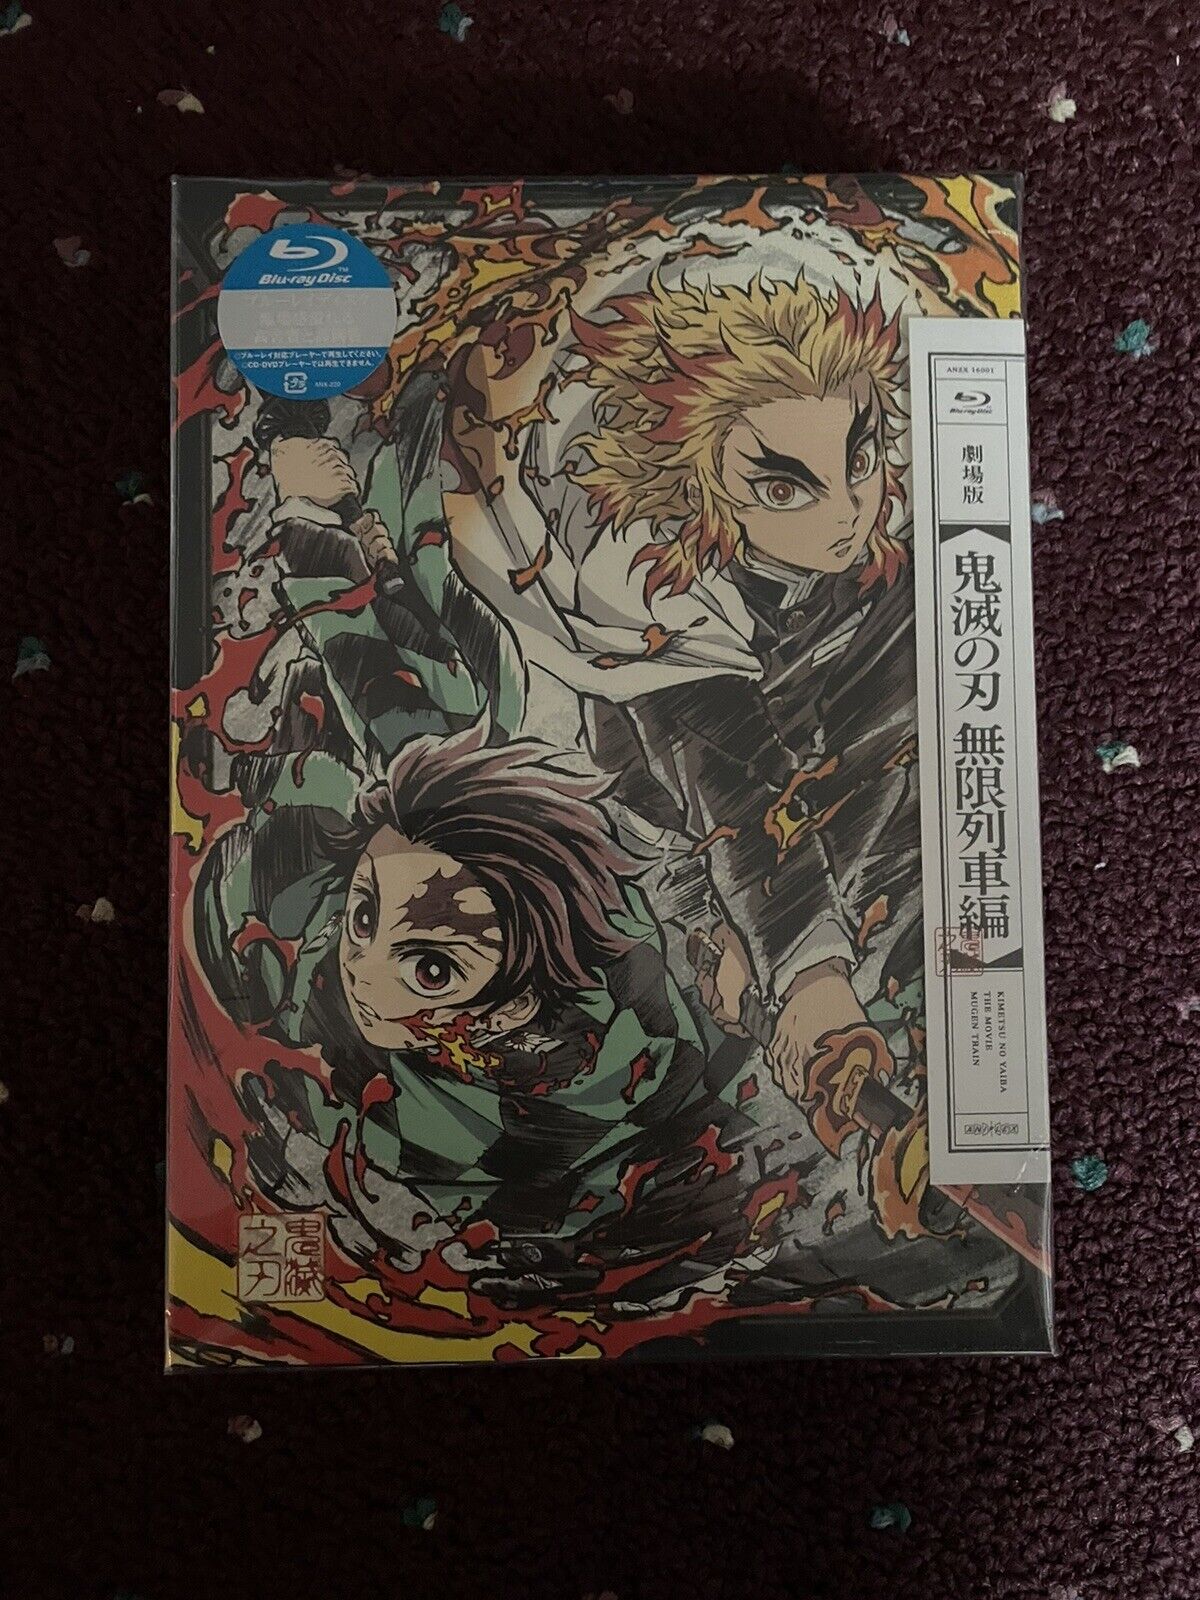 Demon Slayer Kimetsu No Yaiba Mugen Train Limited Edition Blu-Ray Japanese Ver.